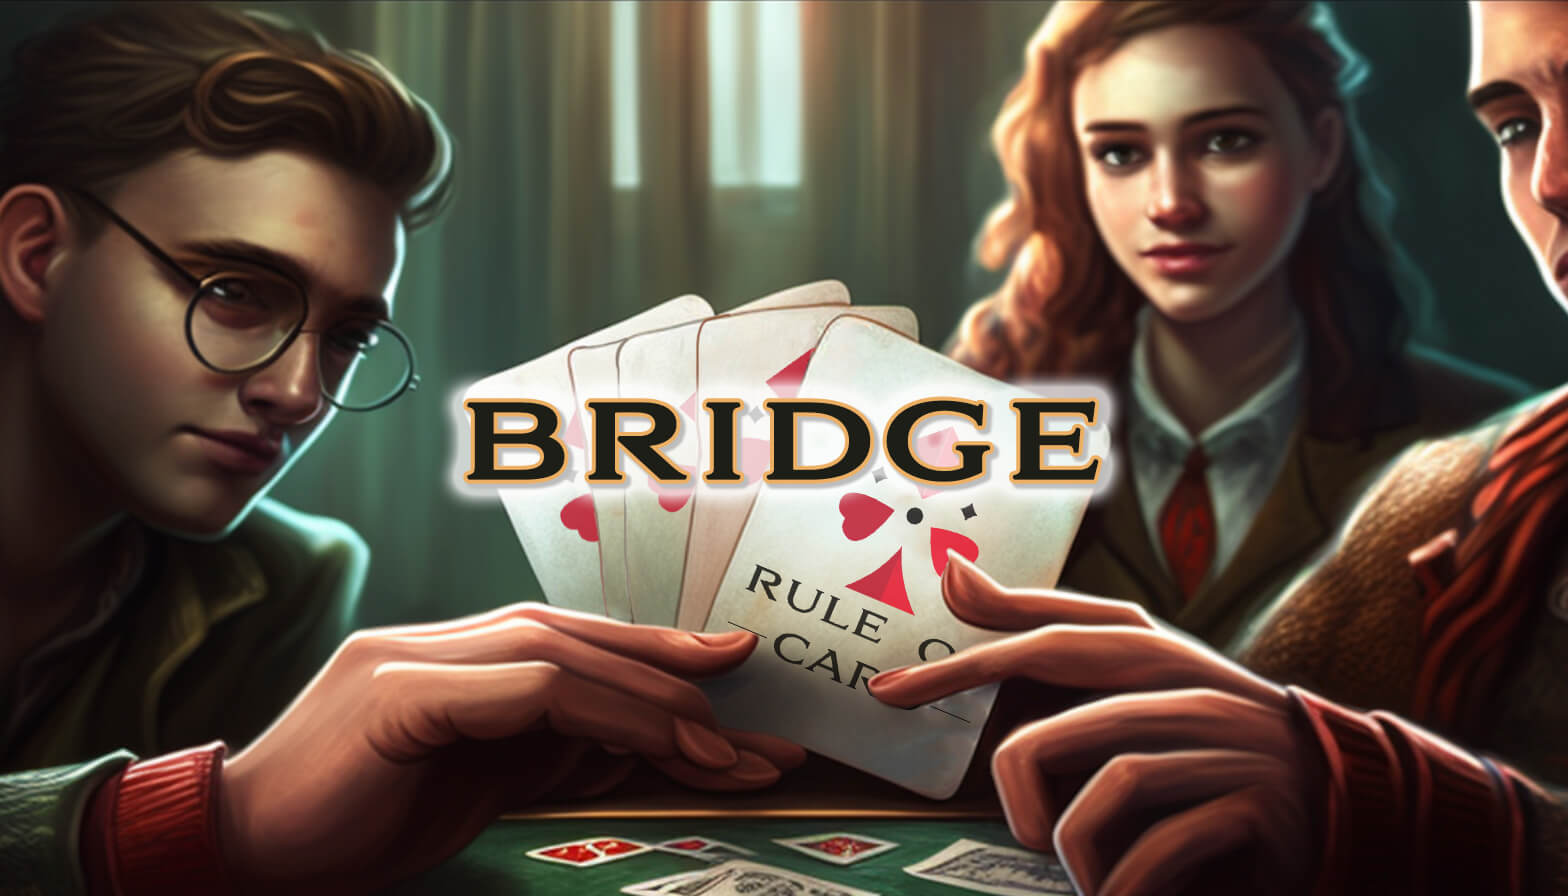 Playing the card game Bridge